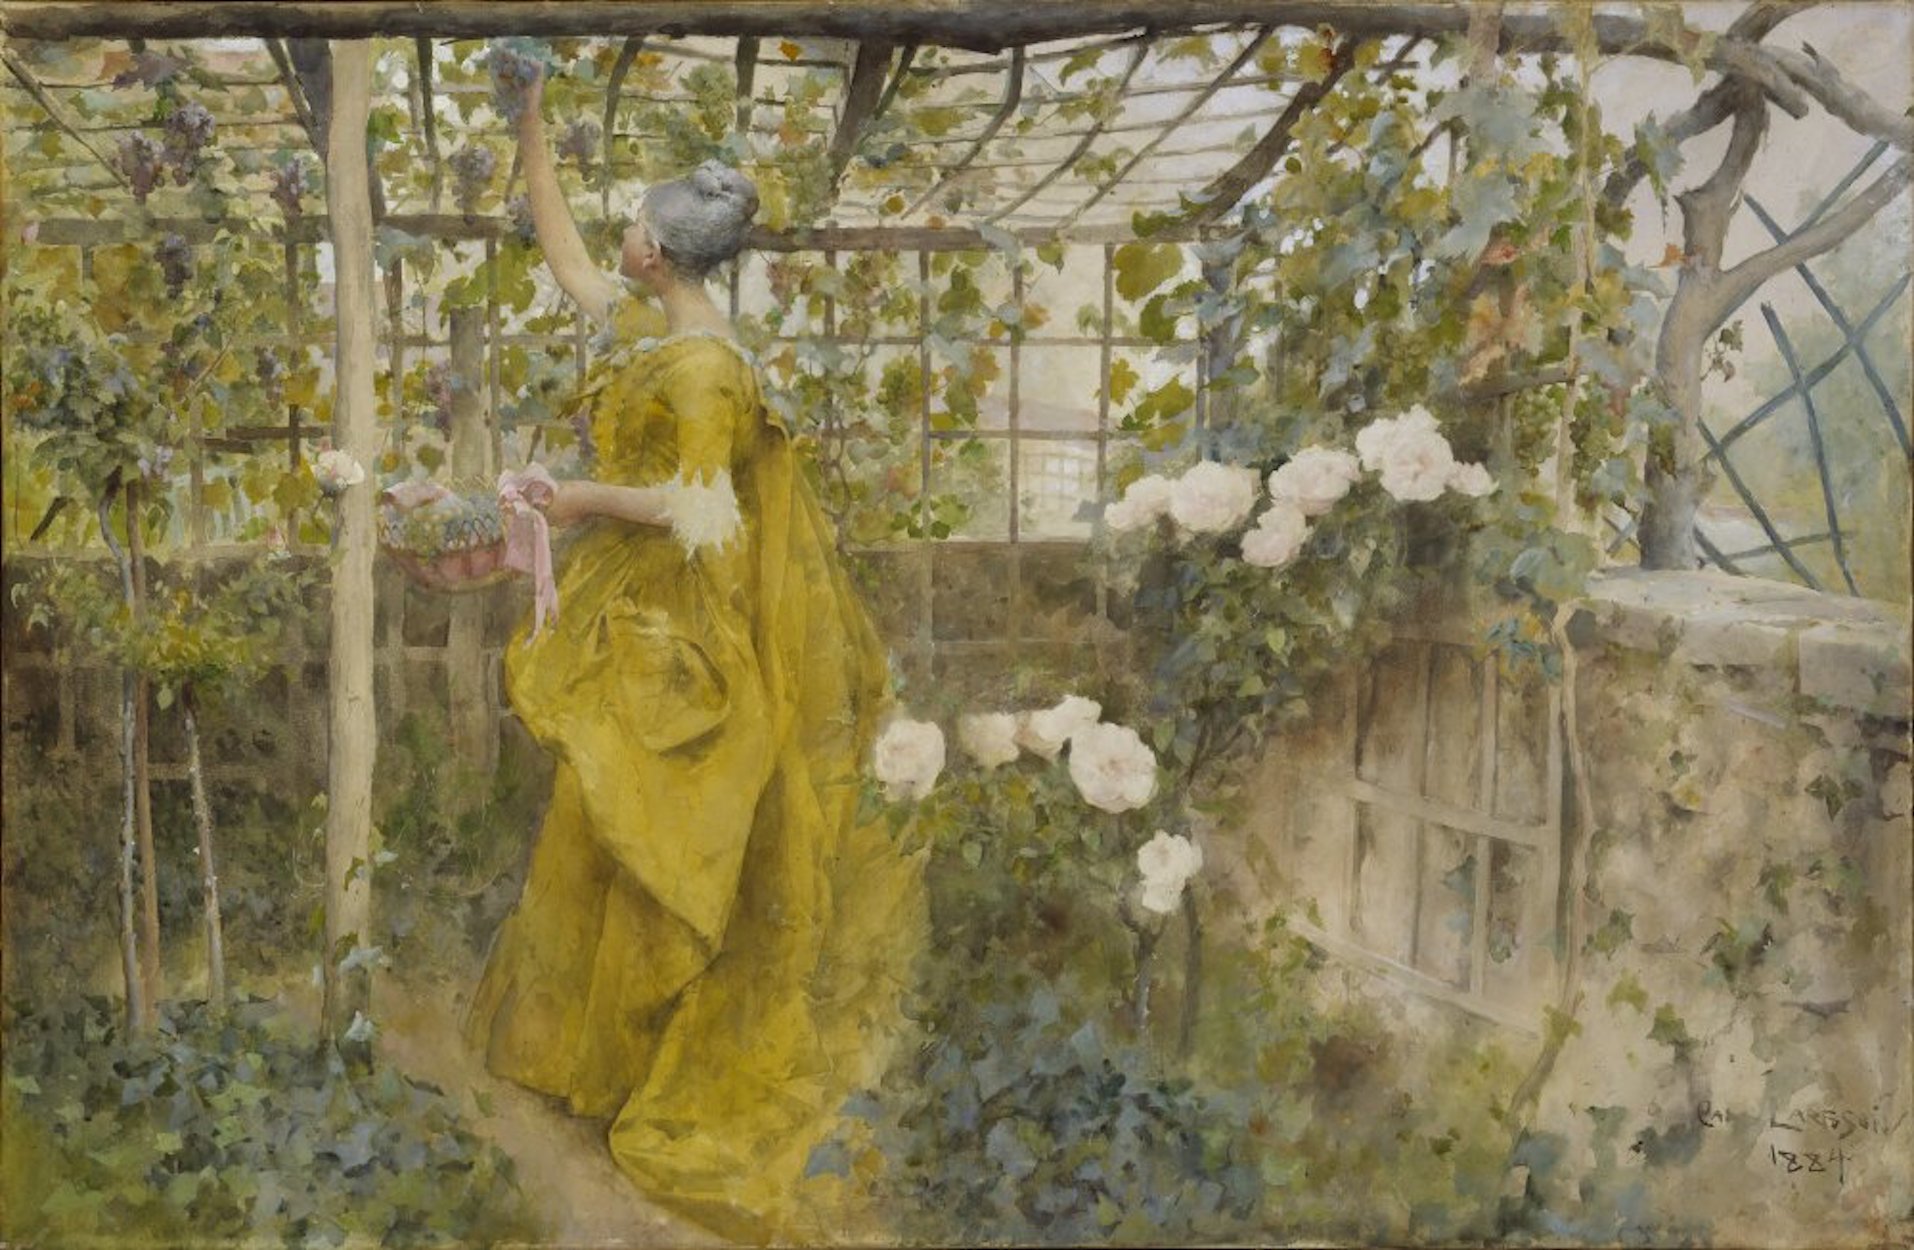 「The Vine」 by Carl Larsson - 1884年 - 60 x 92 cm 